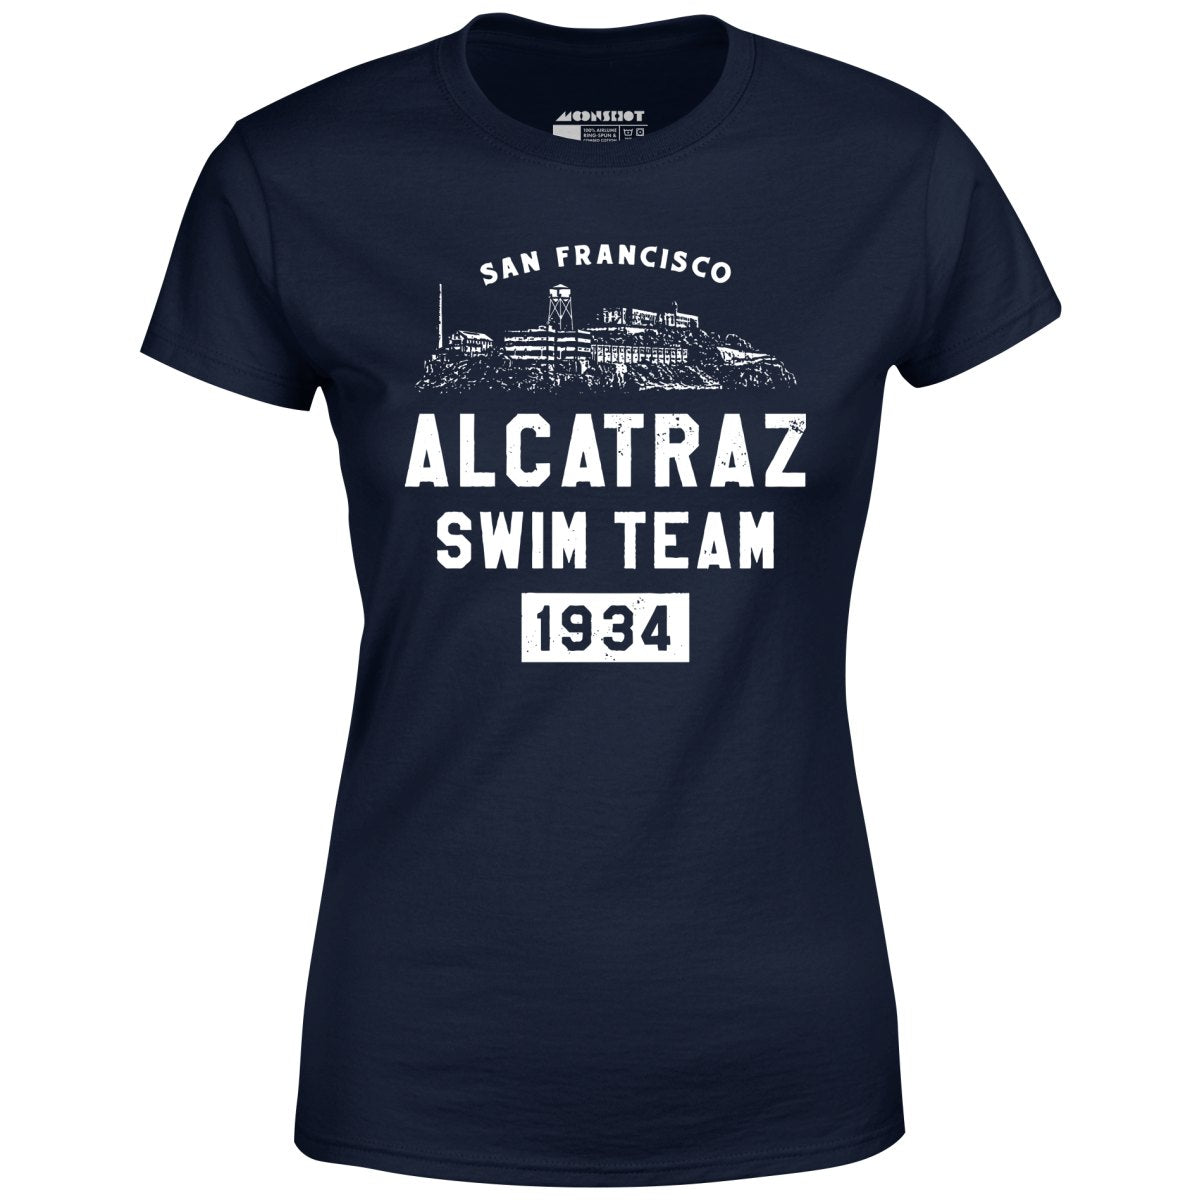 Alcatraz Swim Team - Women's T-Shirt